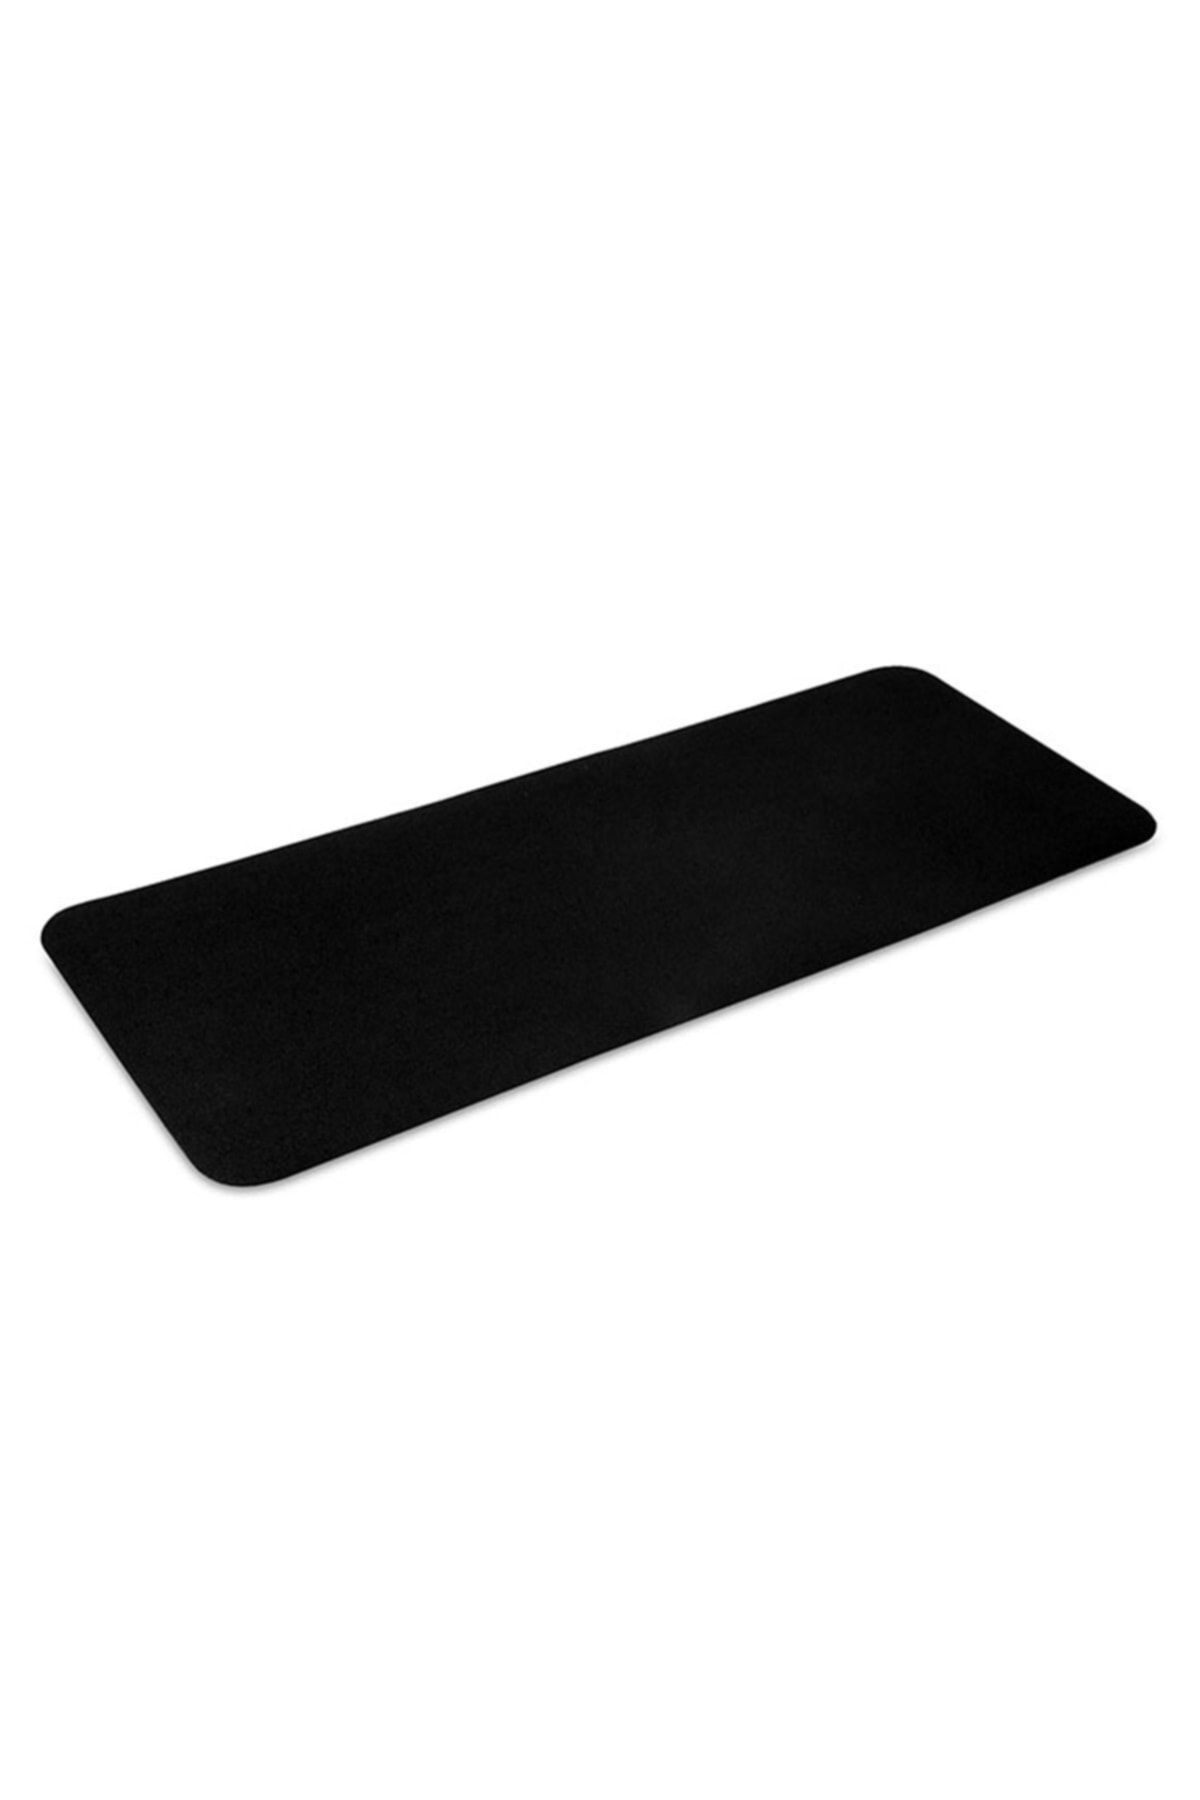 Genel Markalar 300271 Siyah 300*700*3mm Oyuncu Uzun Mouse Pad